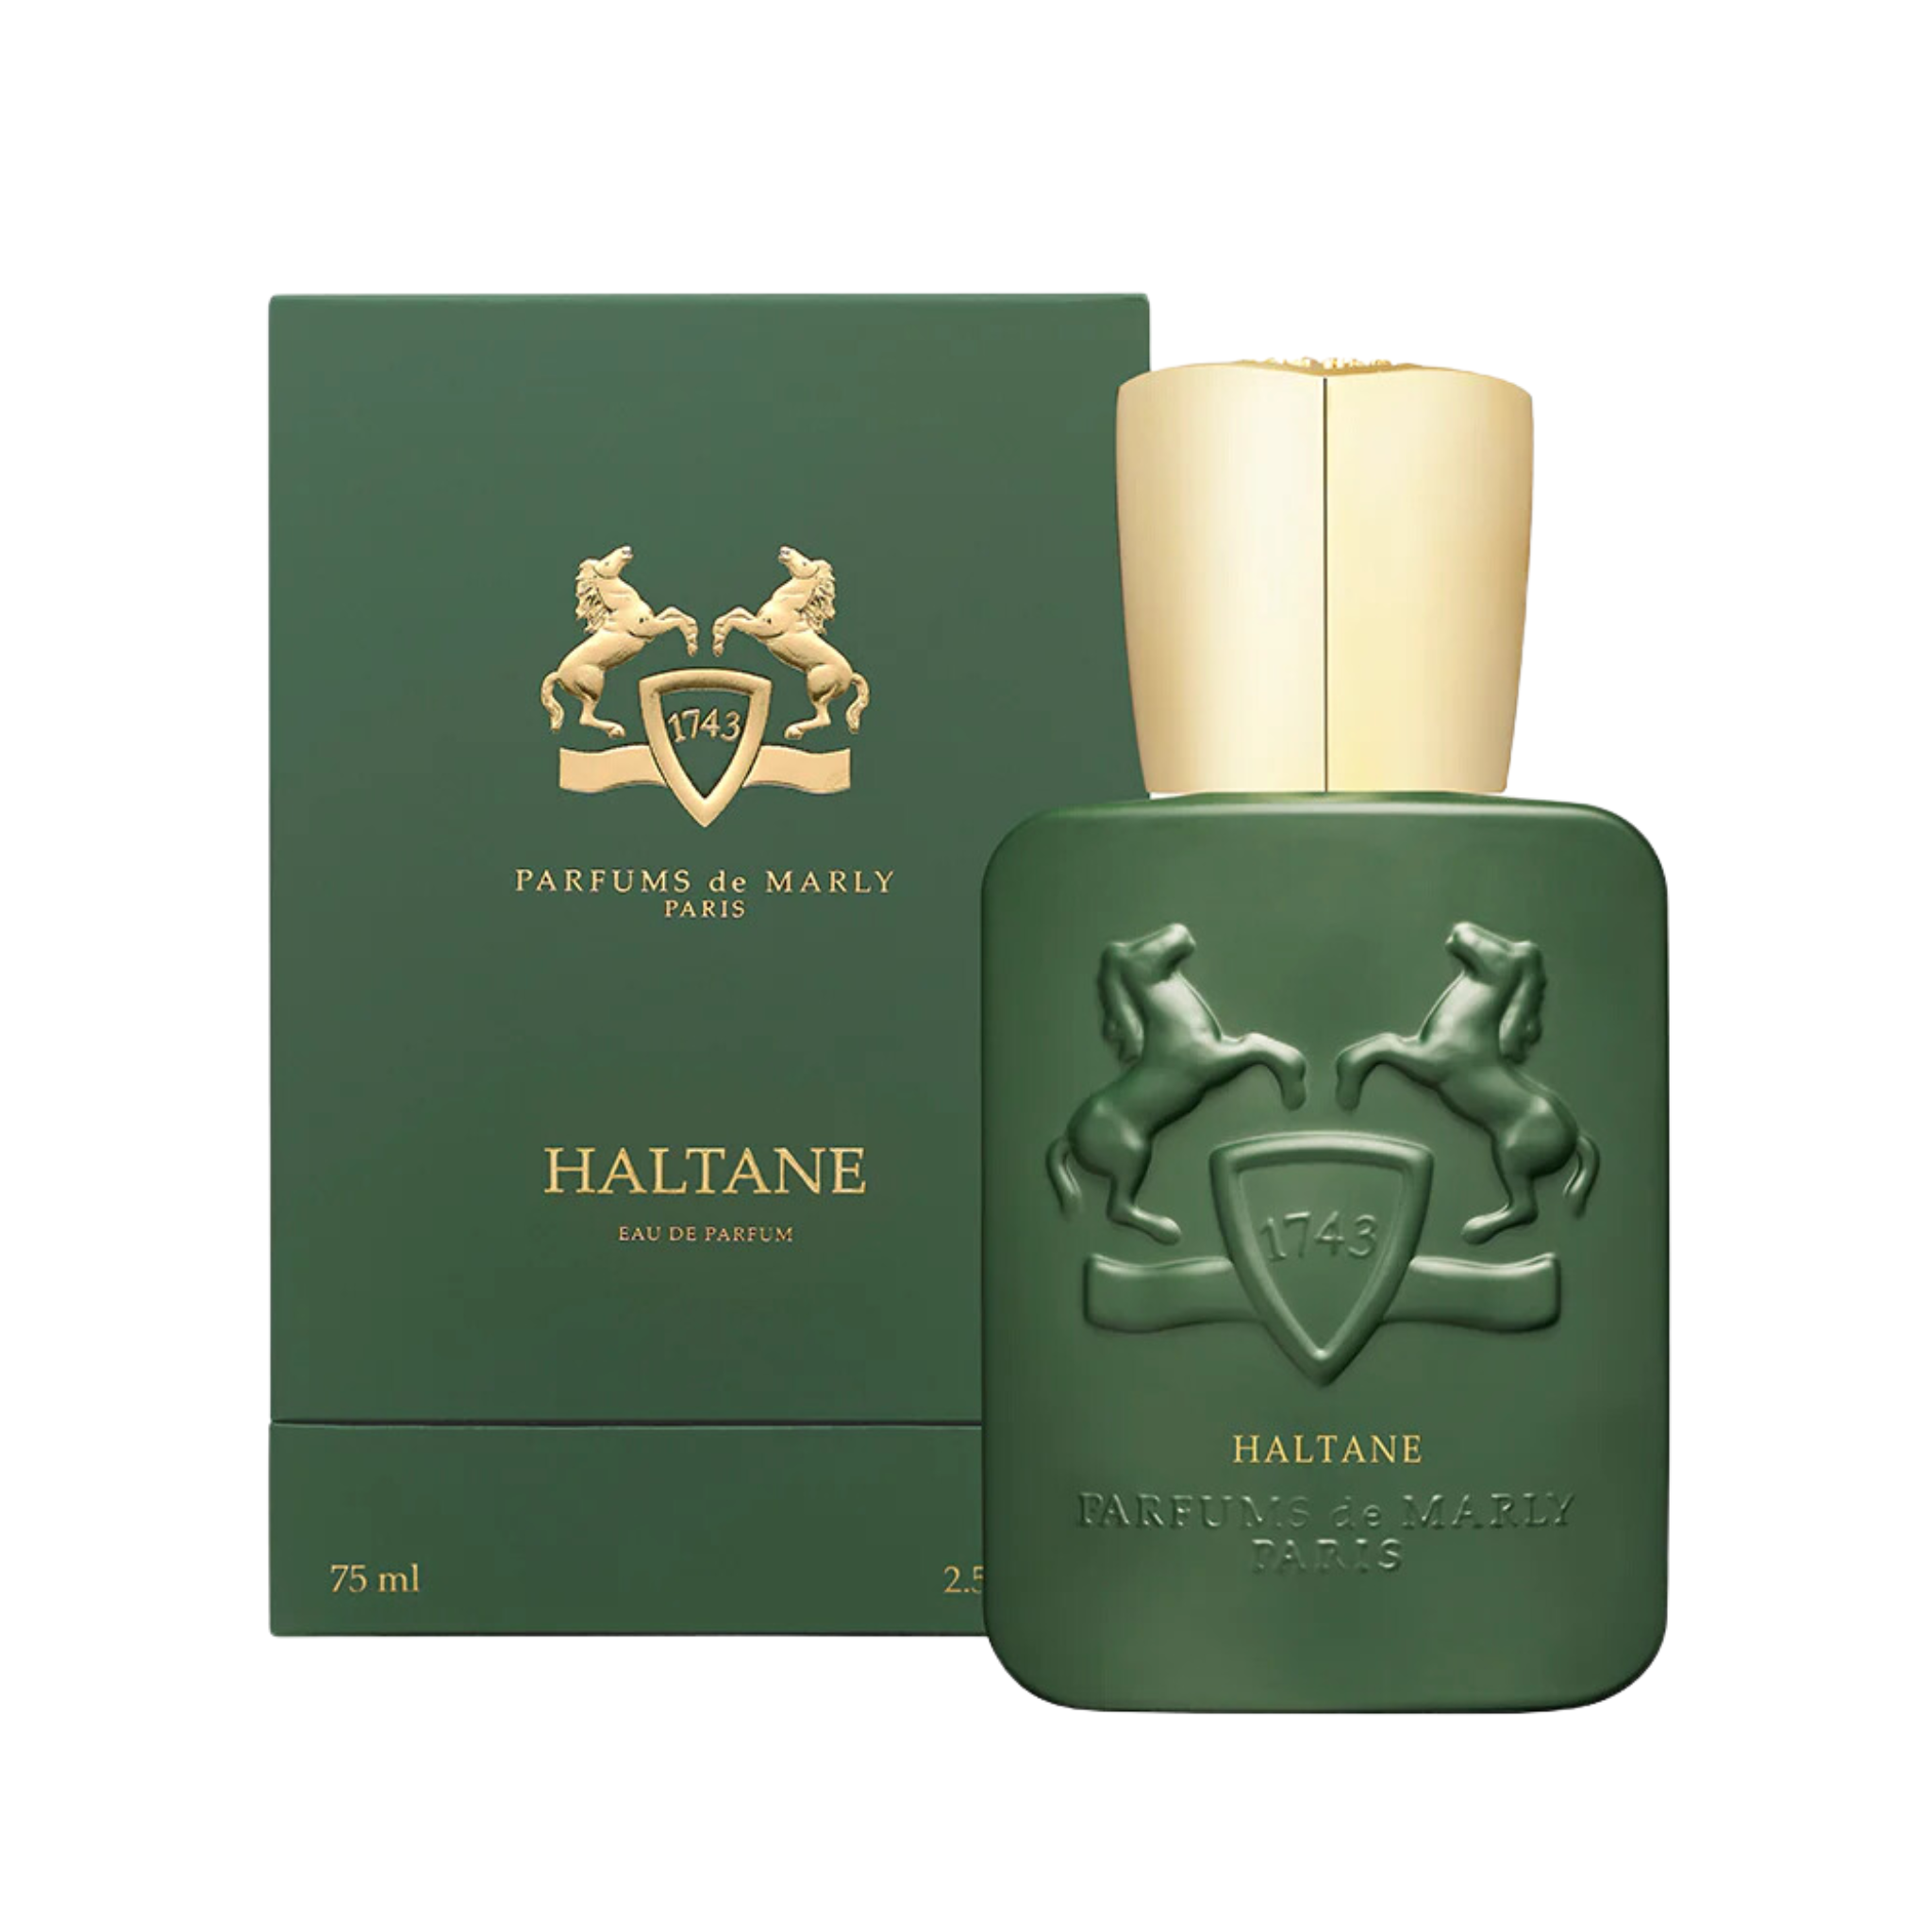 Haltane Parfums de Marly Perfume 75 ml